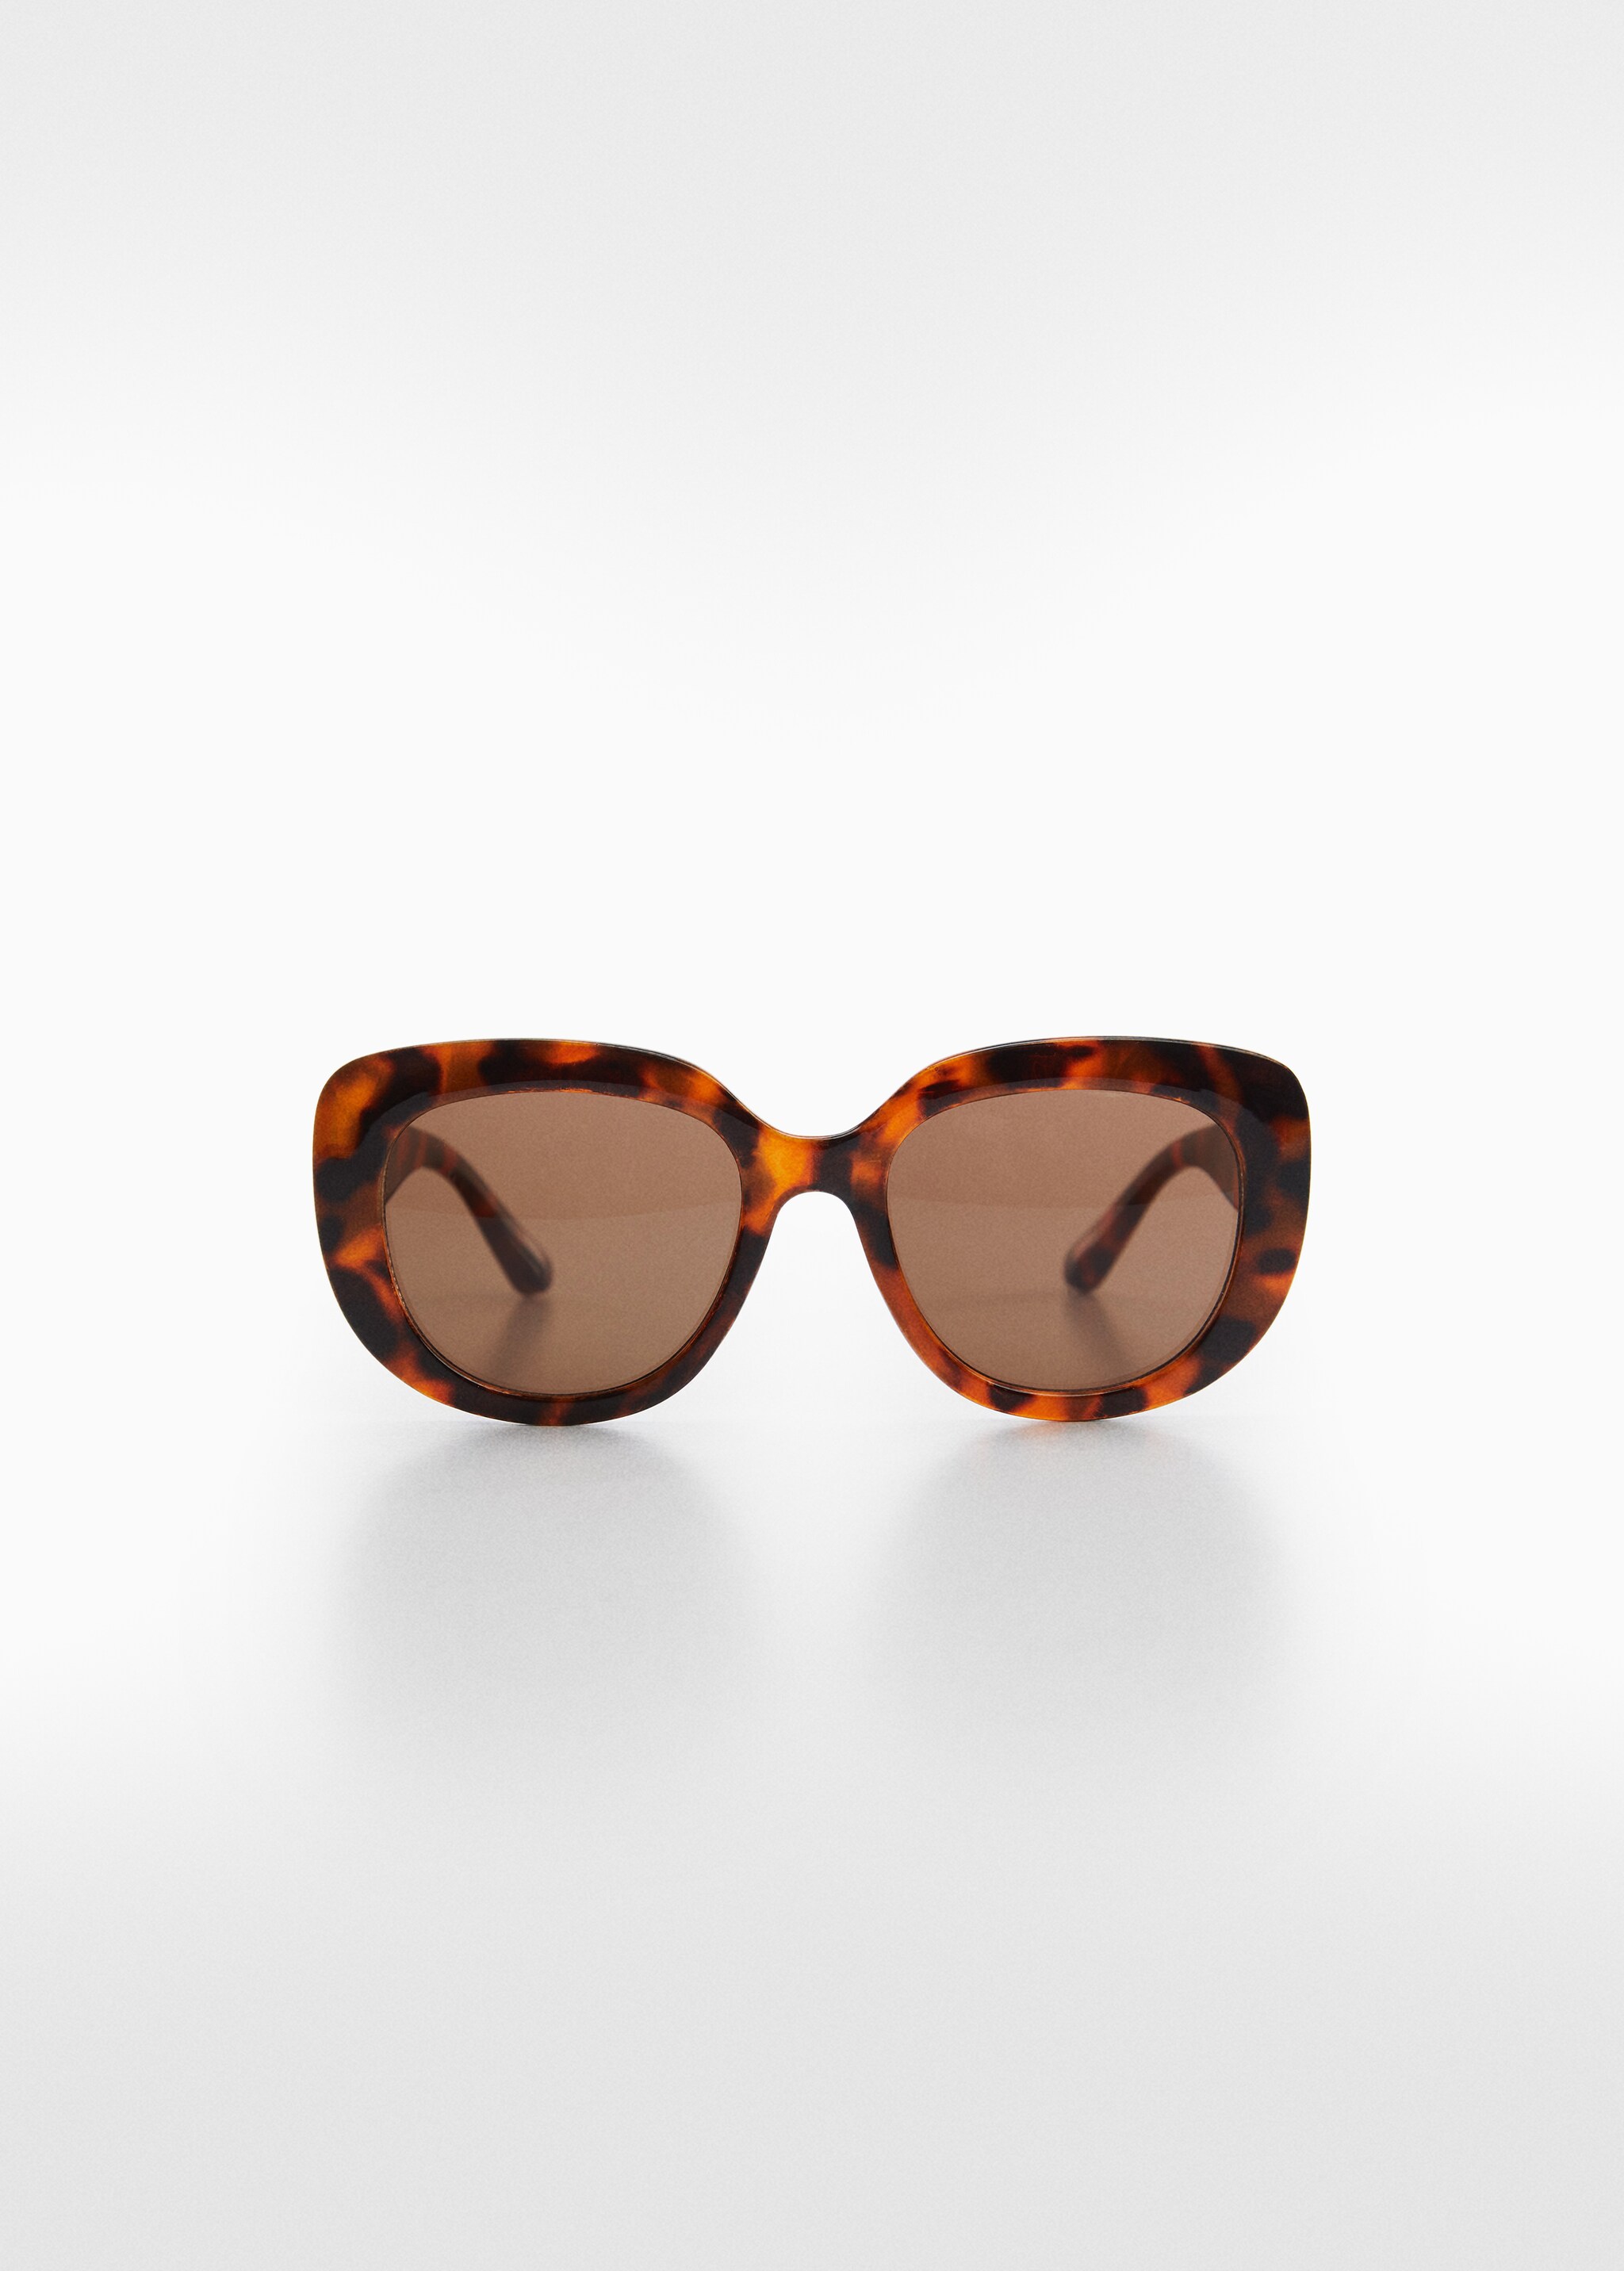 Tortoiseshell rounded sunglasses - Article without model